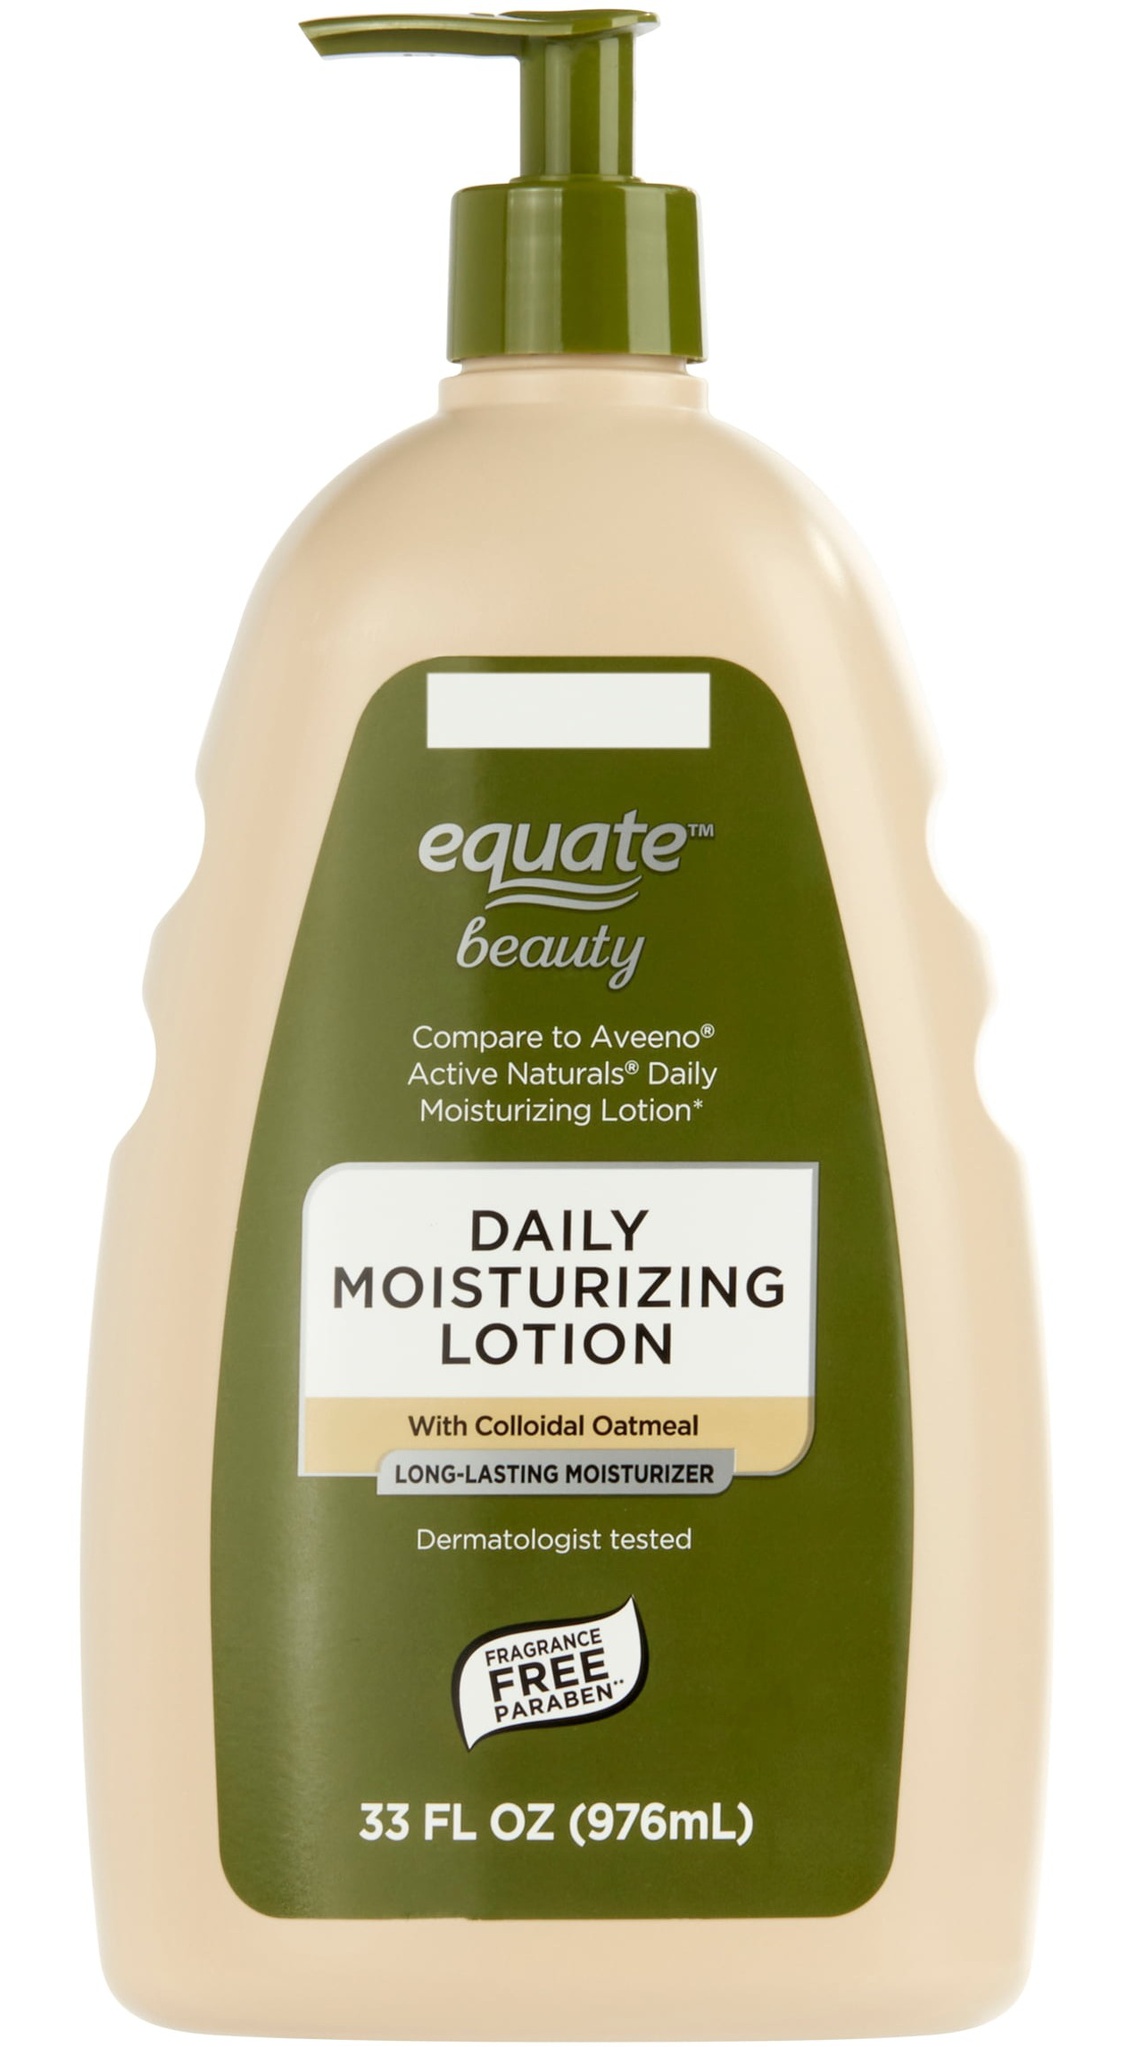 Equate Fragrance Free Daily Moisturizing Lotion